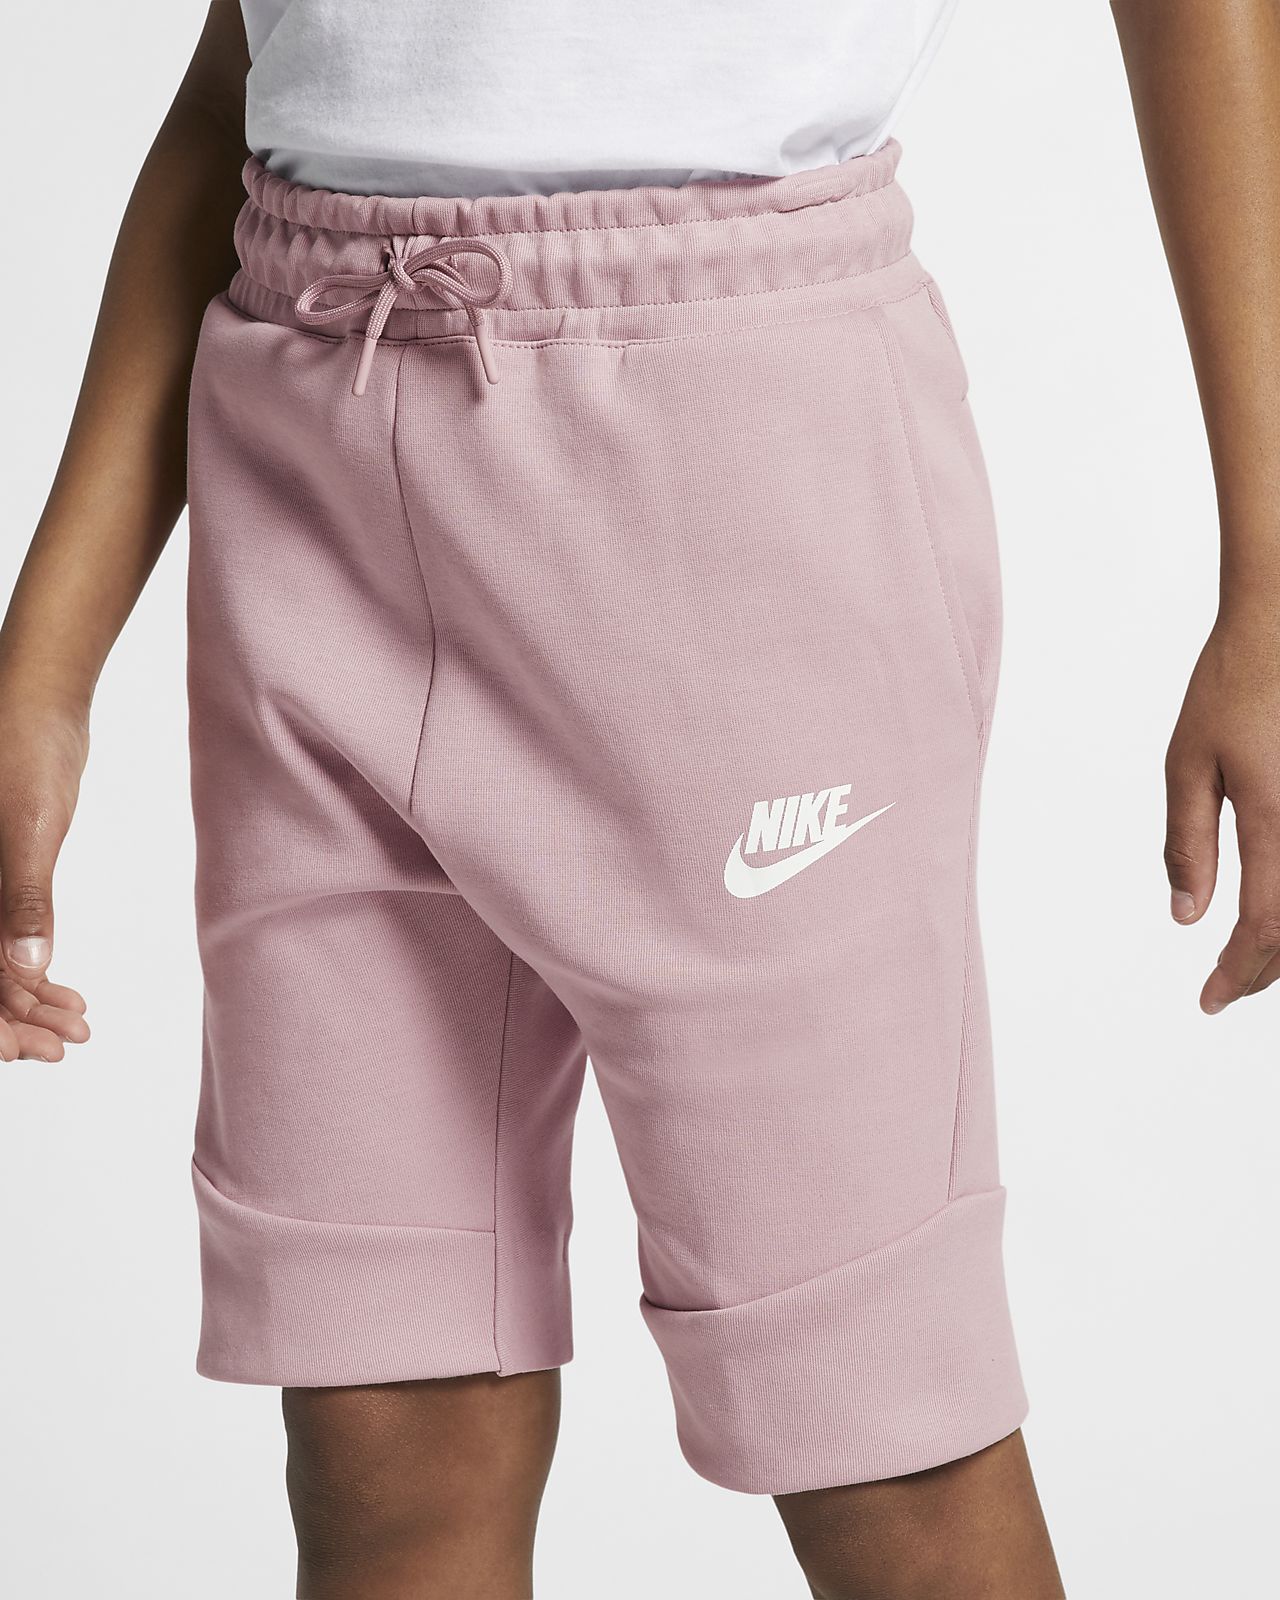 baby pink nike shorts